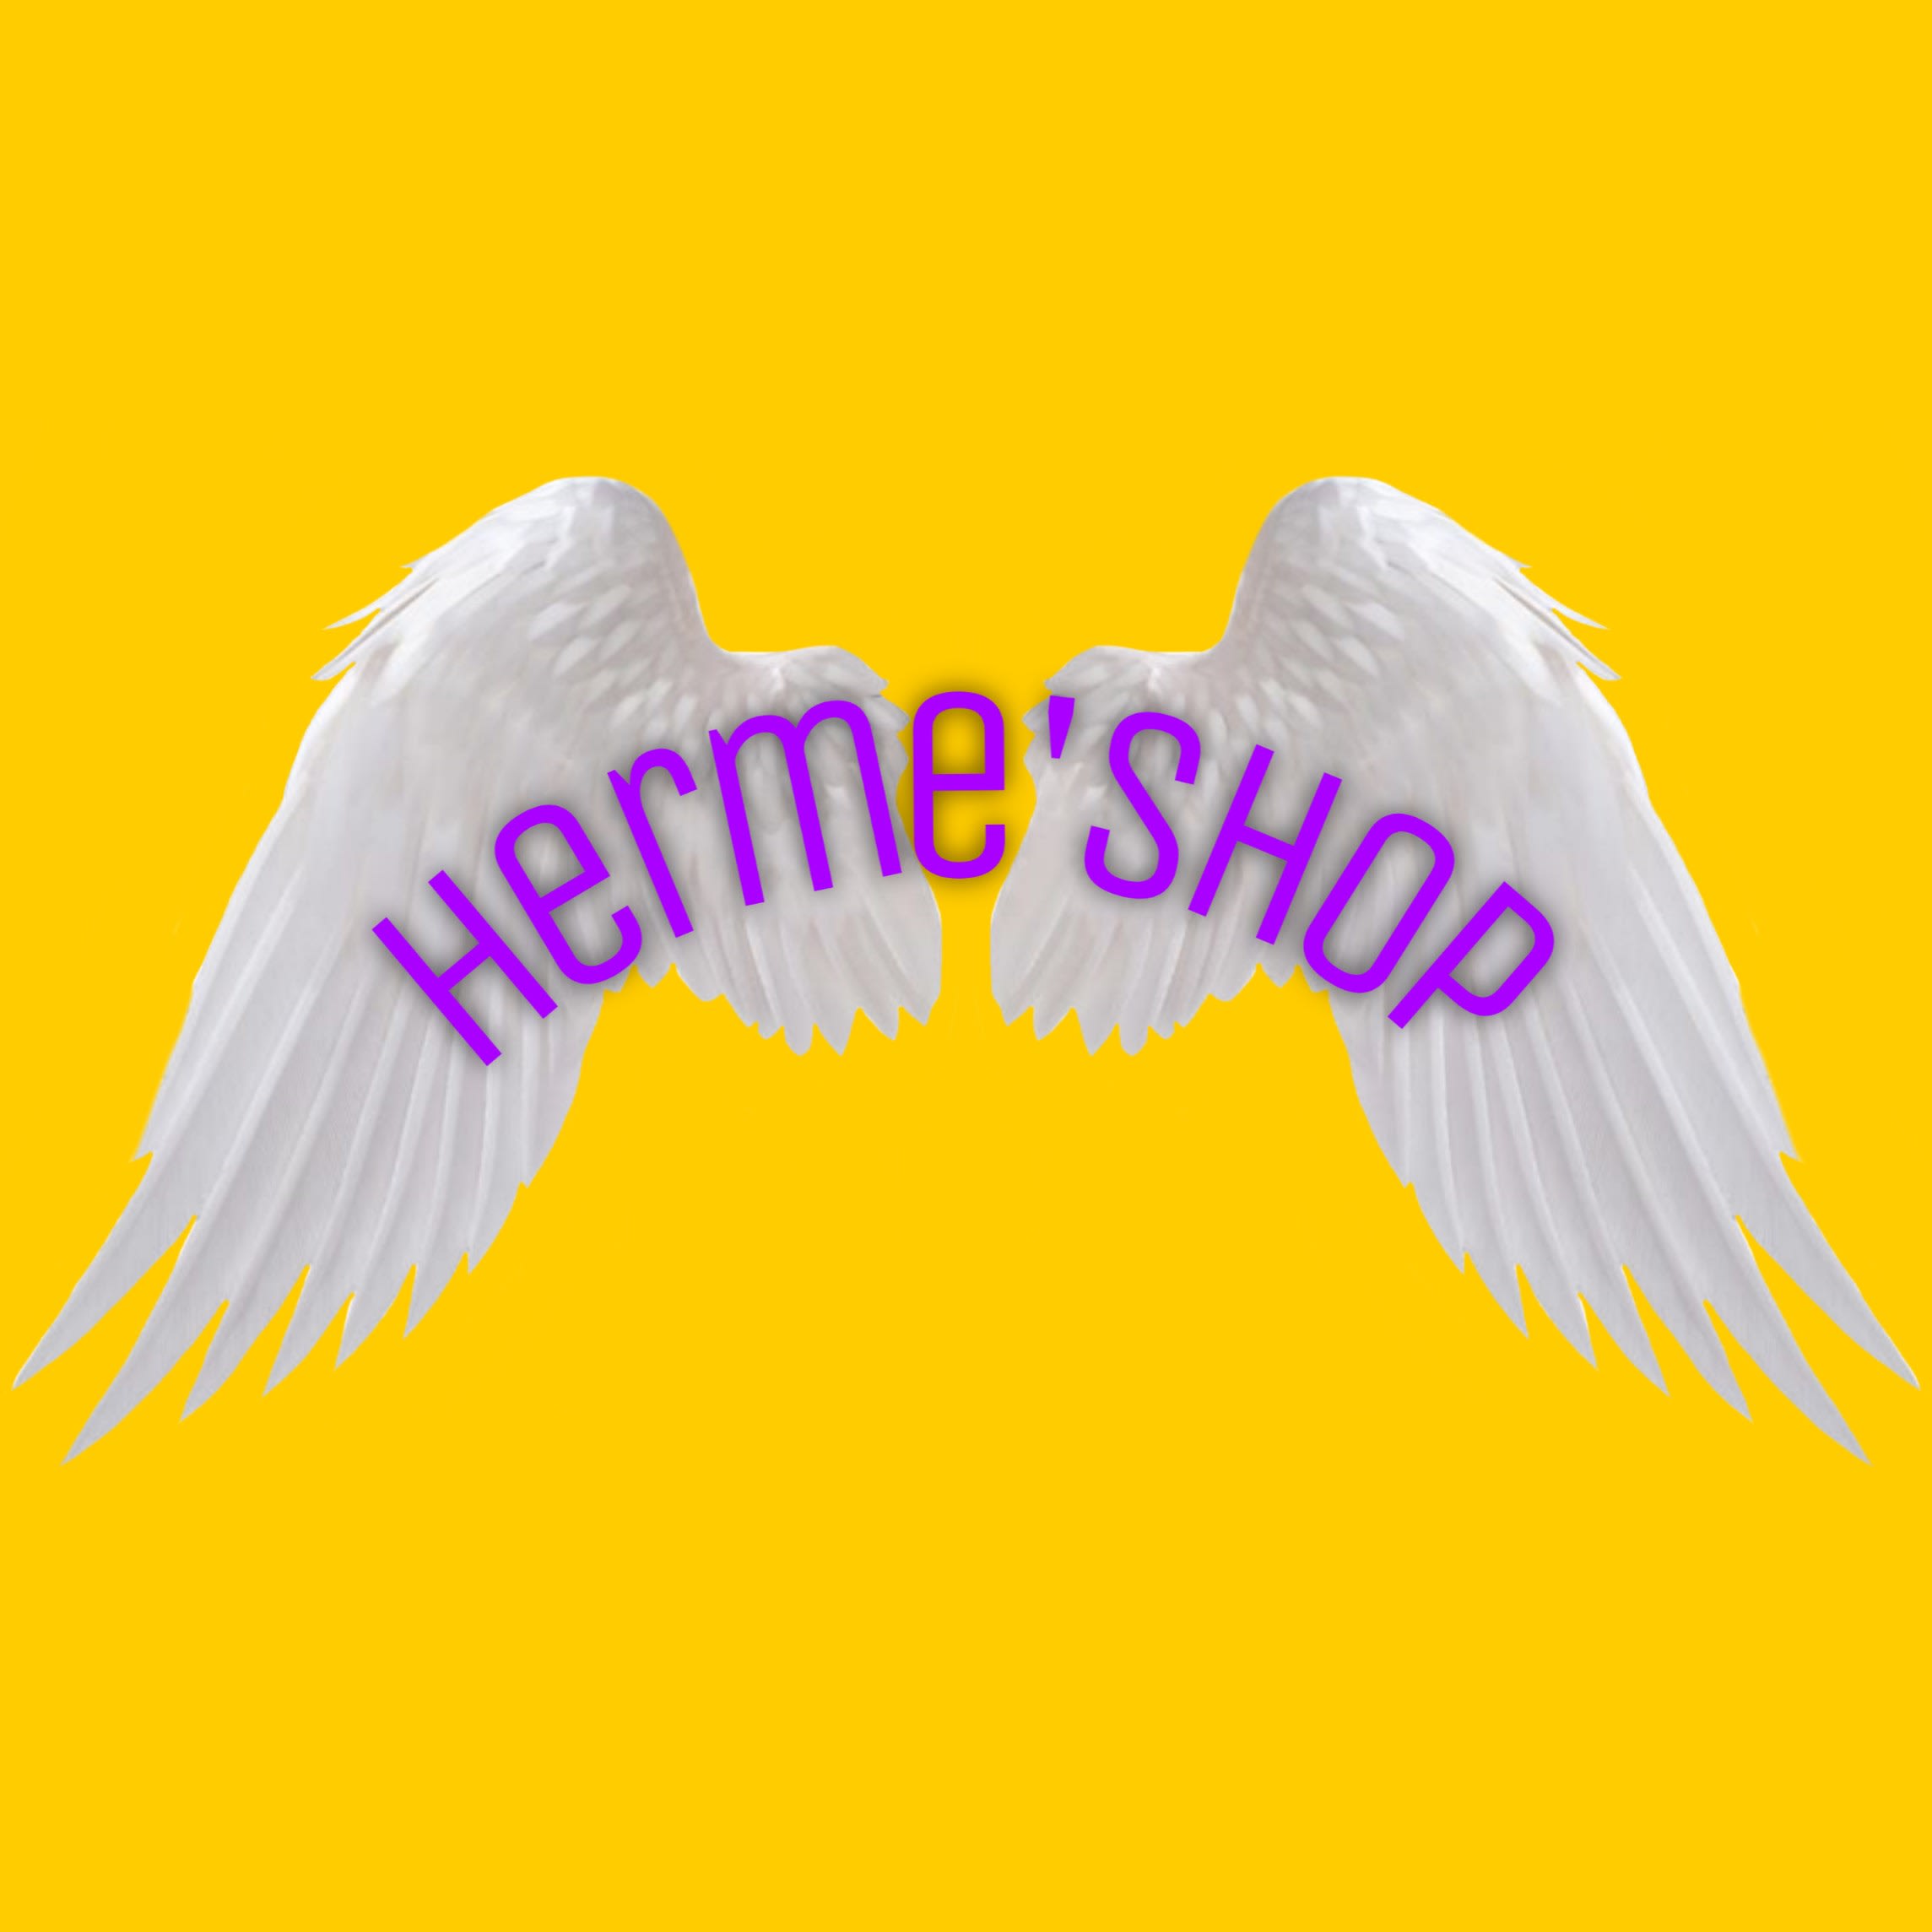 Herme Shop